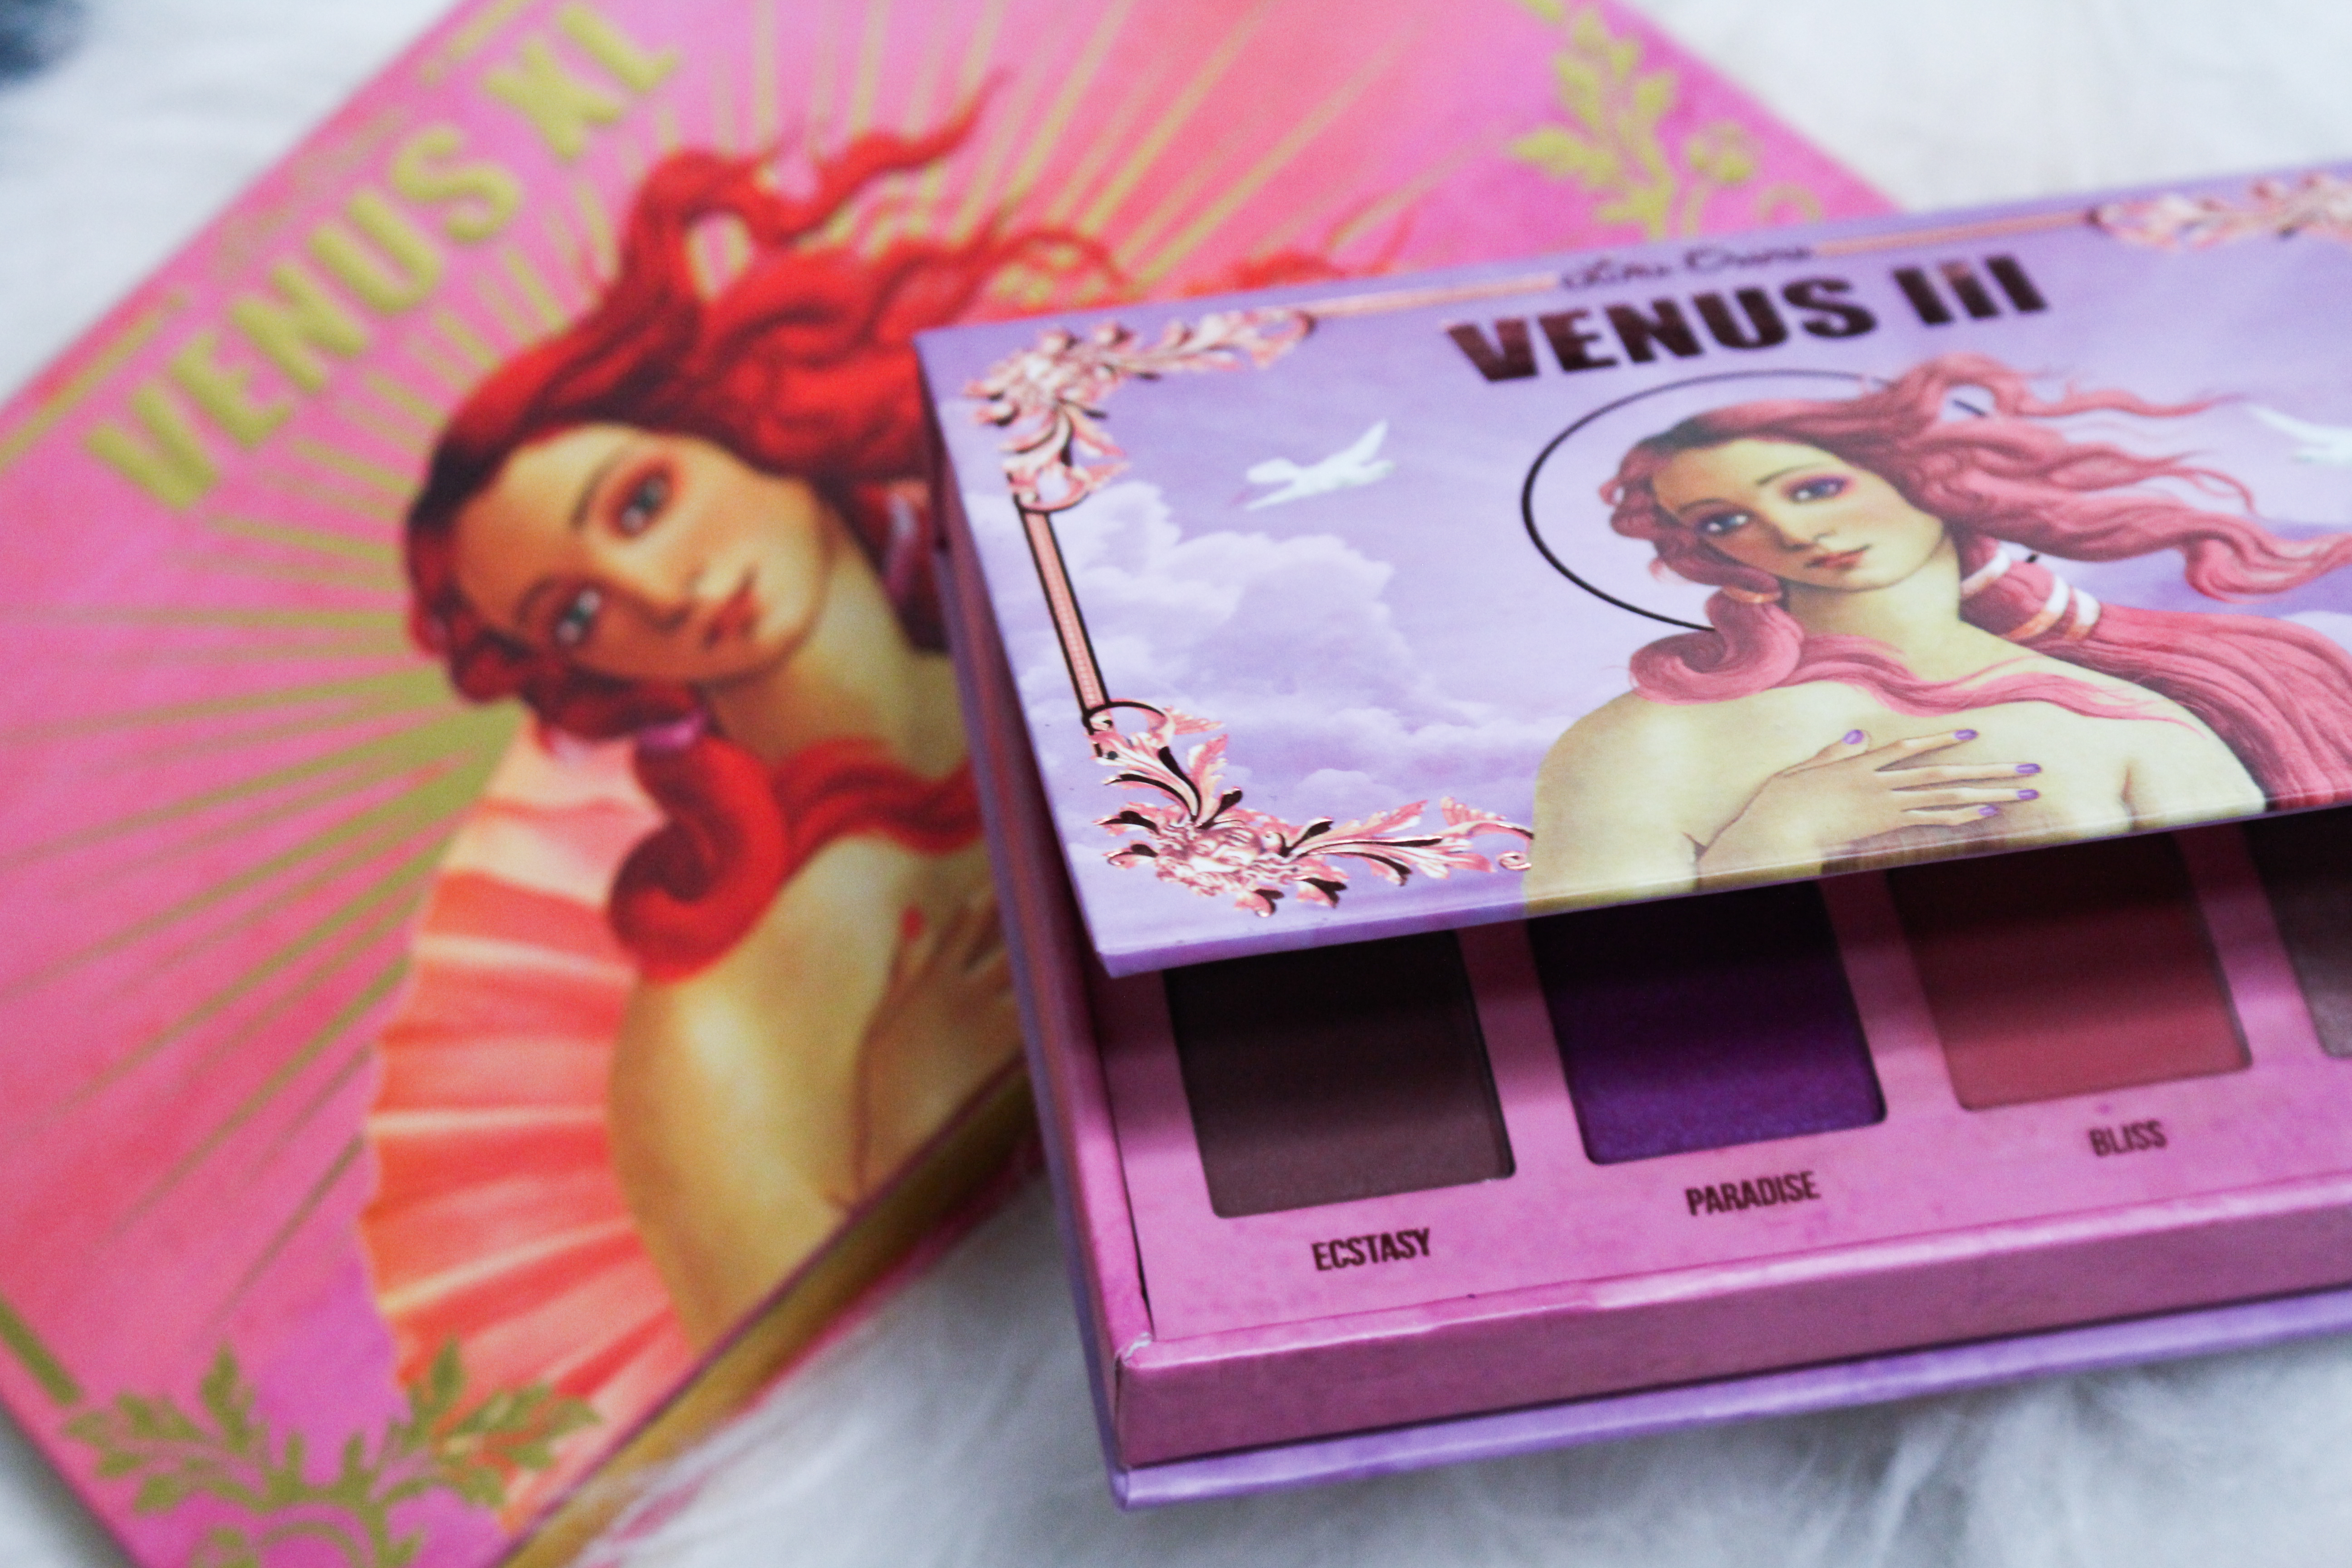 Lime Crime Venus XL + Venus 3 review & look!